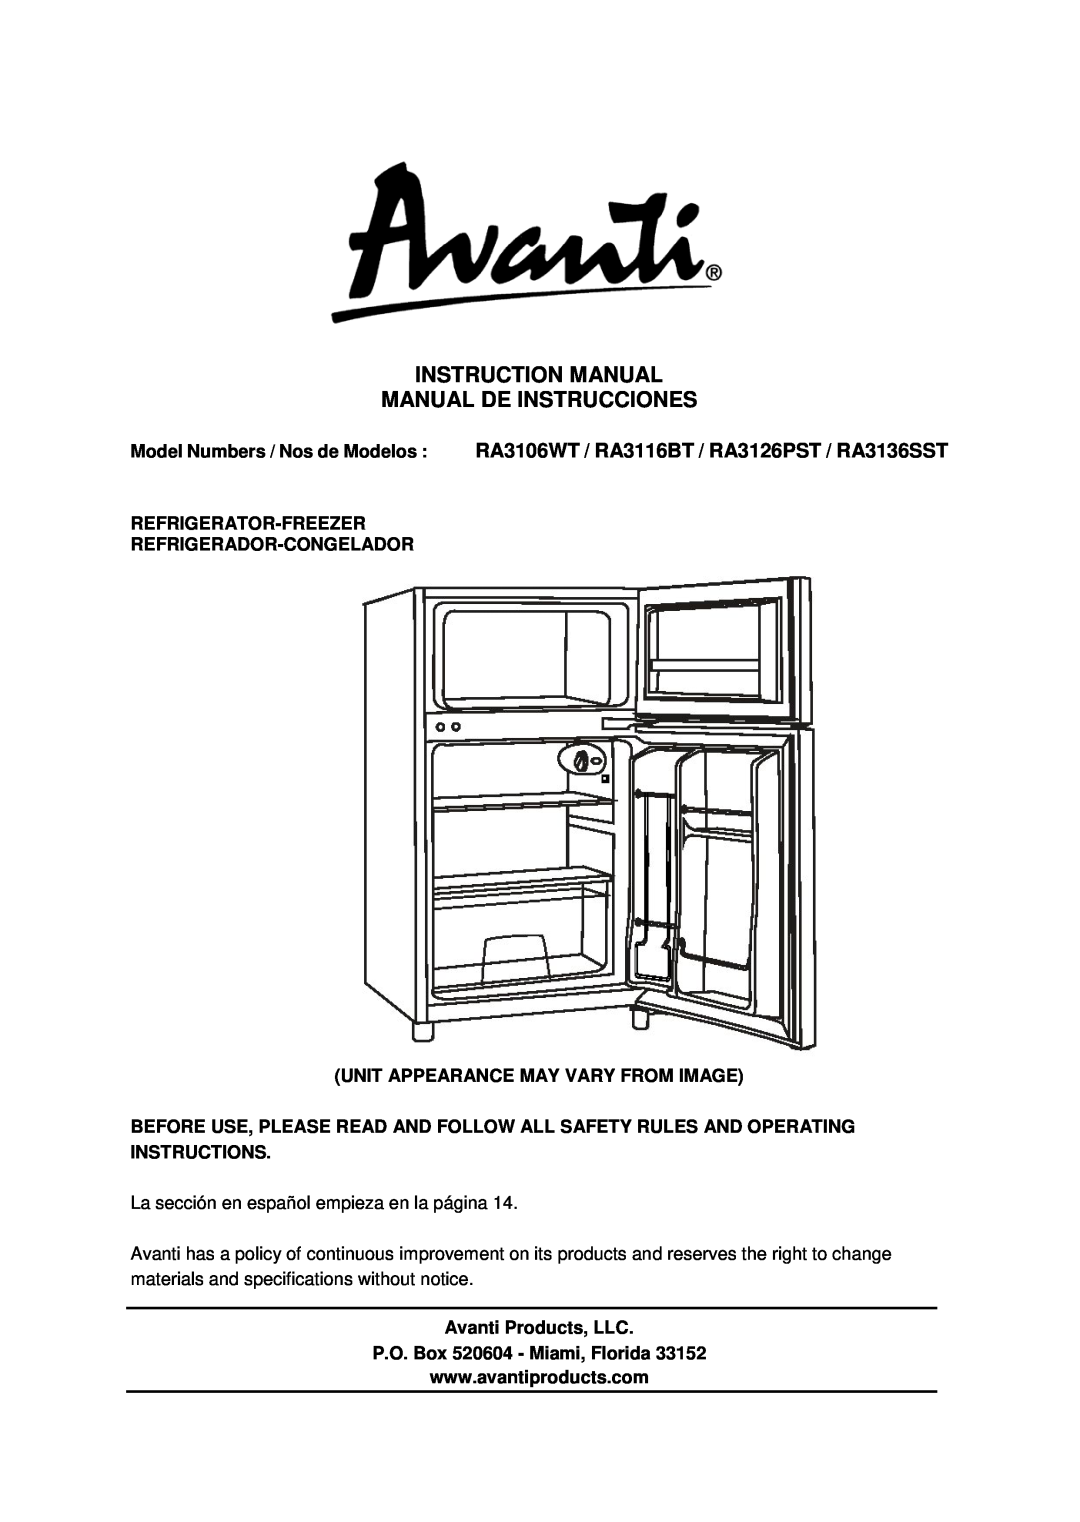 Avanti RA3116BT instruction manual Refrigerator-Freezer Refrigerador-Congelador, Unit Appearance May Vary From Image 